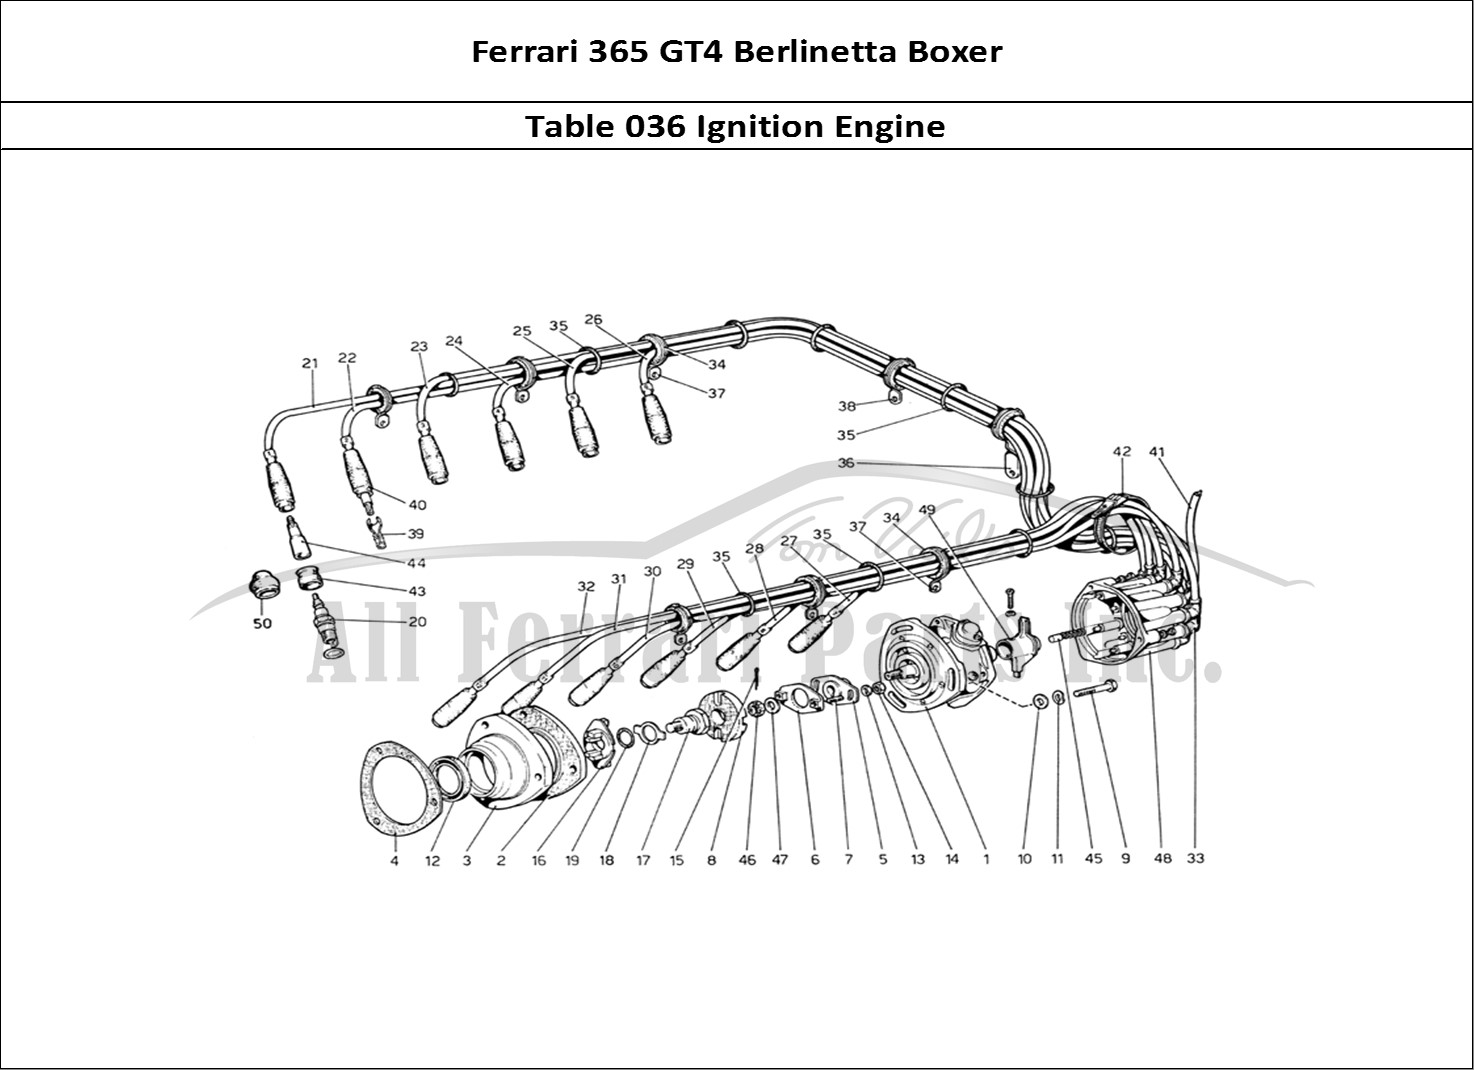 Ferrari Parts Ferrari 365 GT4 Berlinetta Boxer Page 036 Engine Ignition